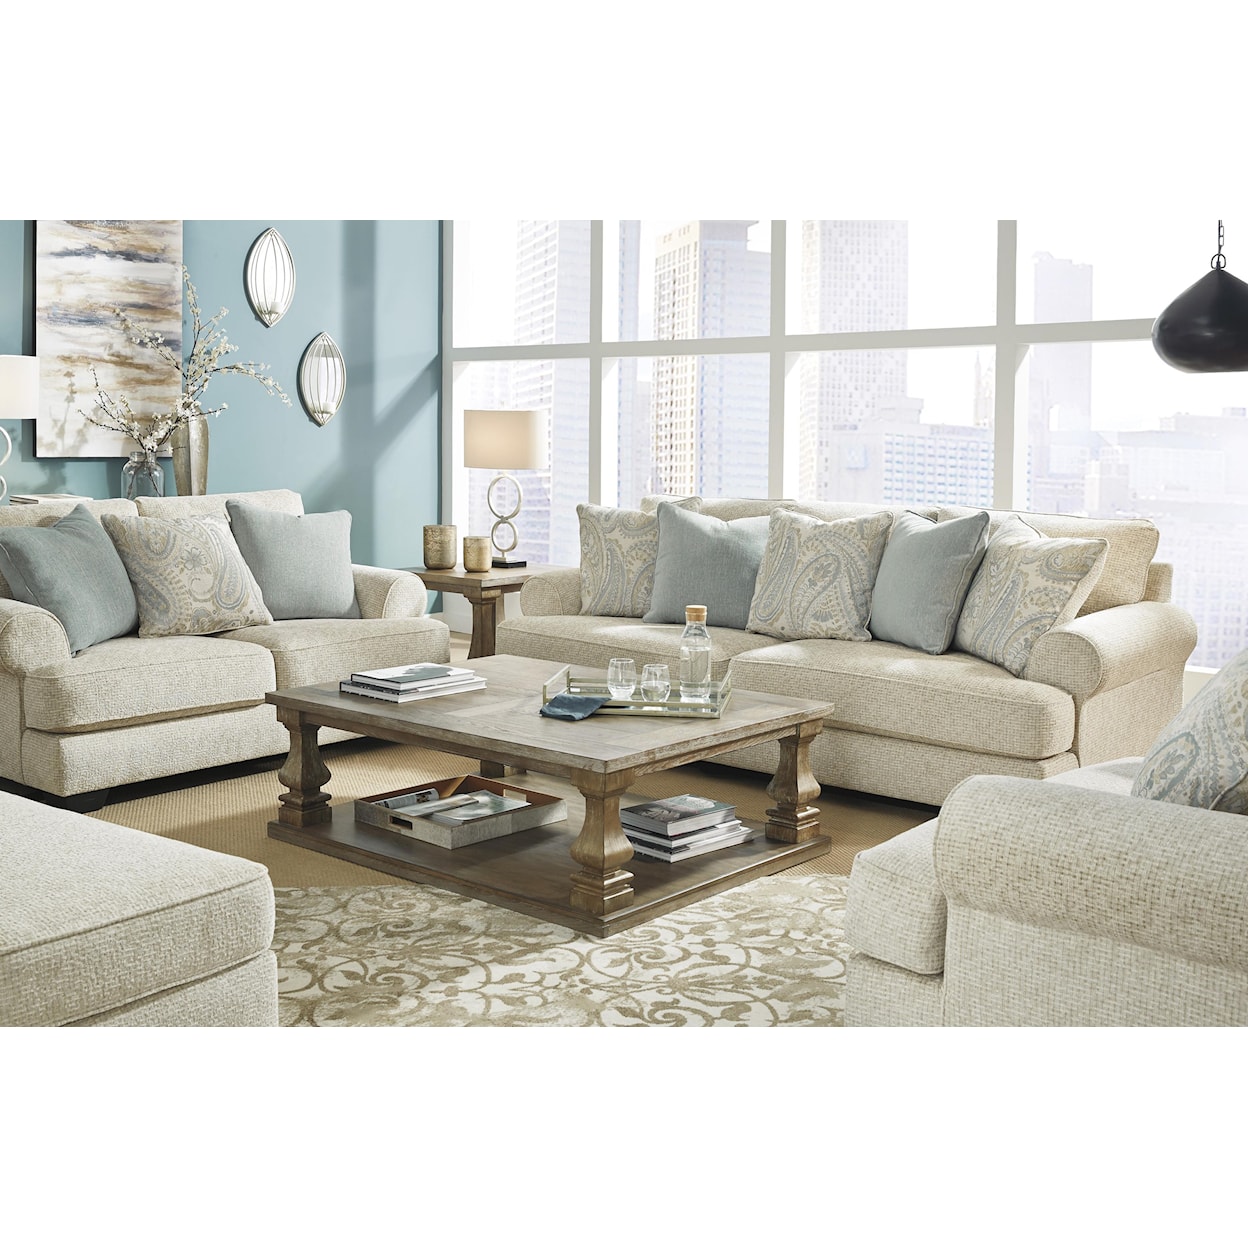 Ashley Furniture Monaghan Sofa, Loveseat, Chair and Ottoman